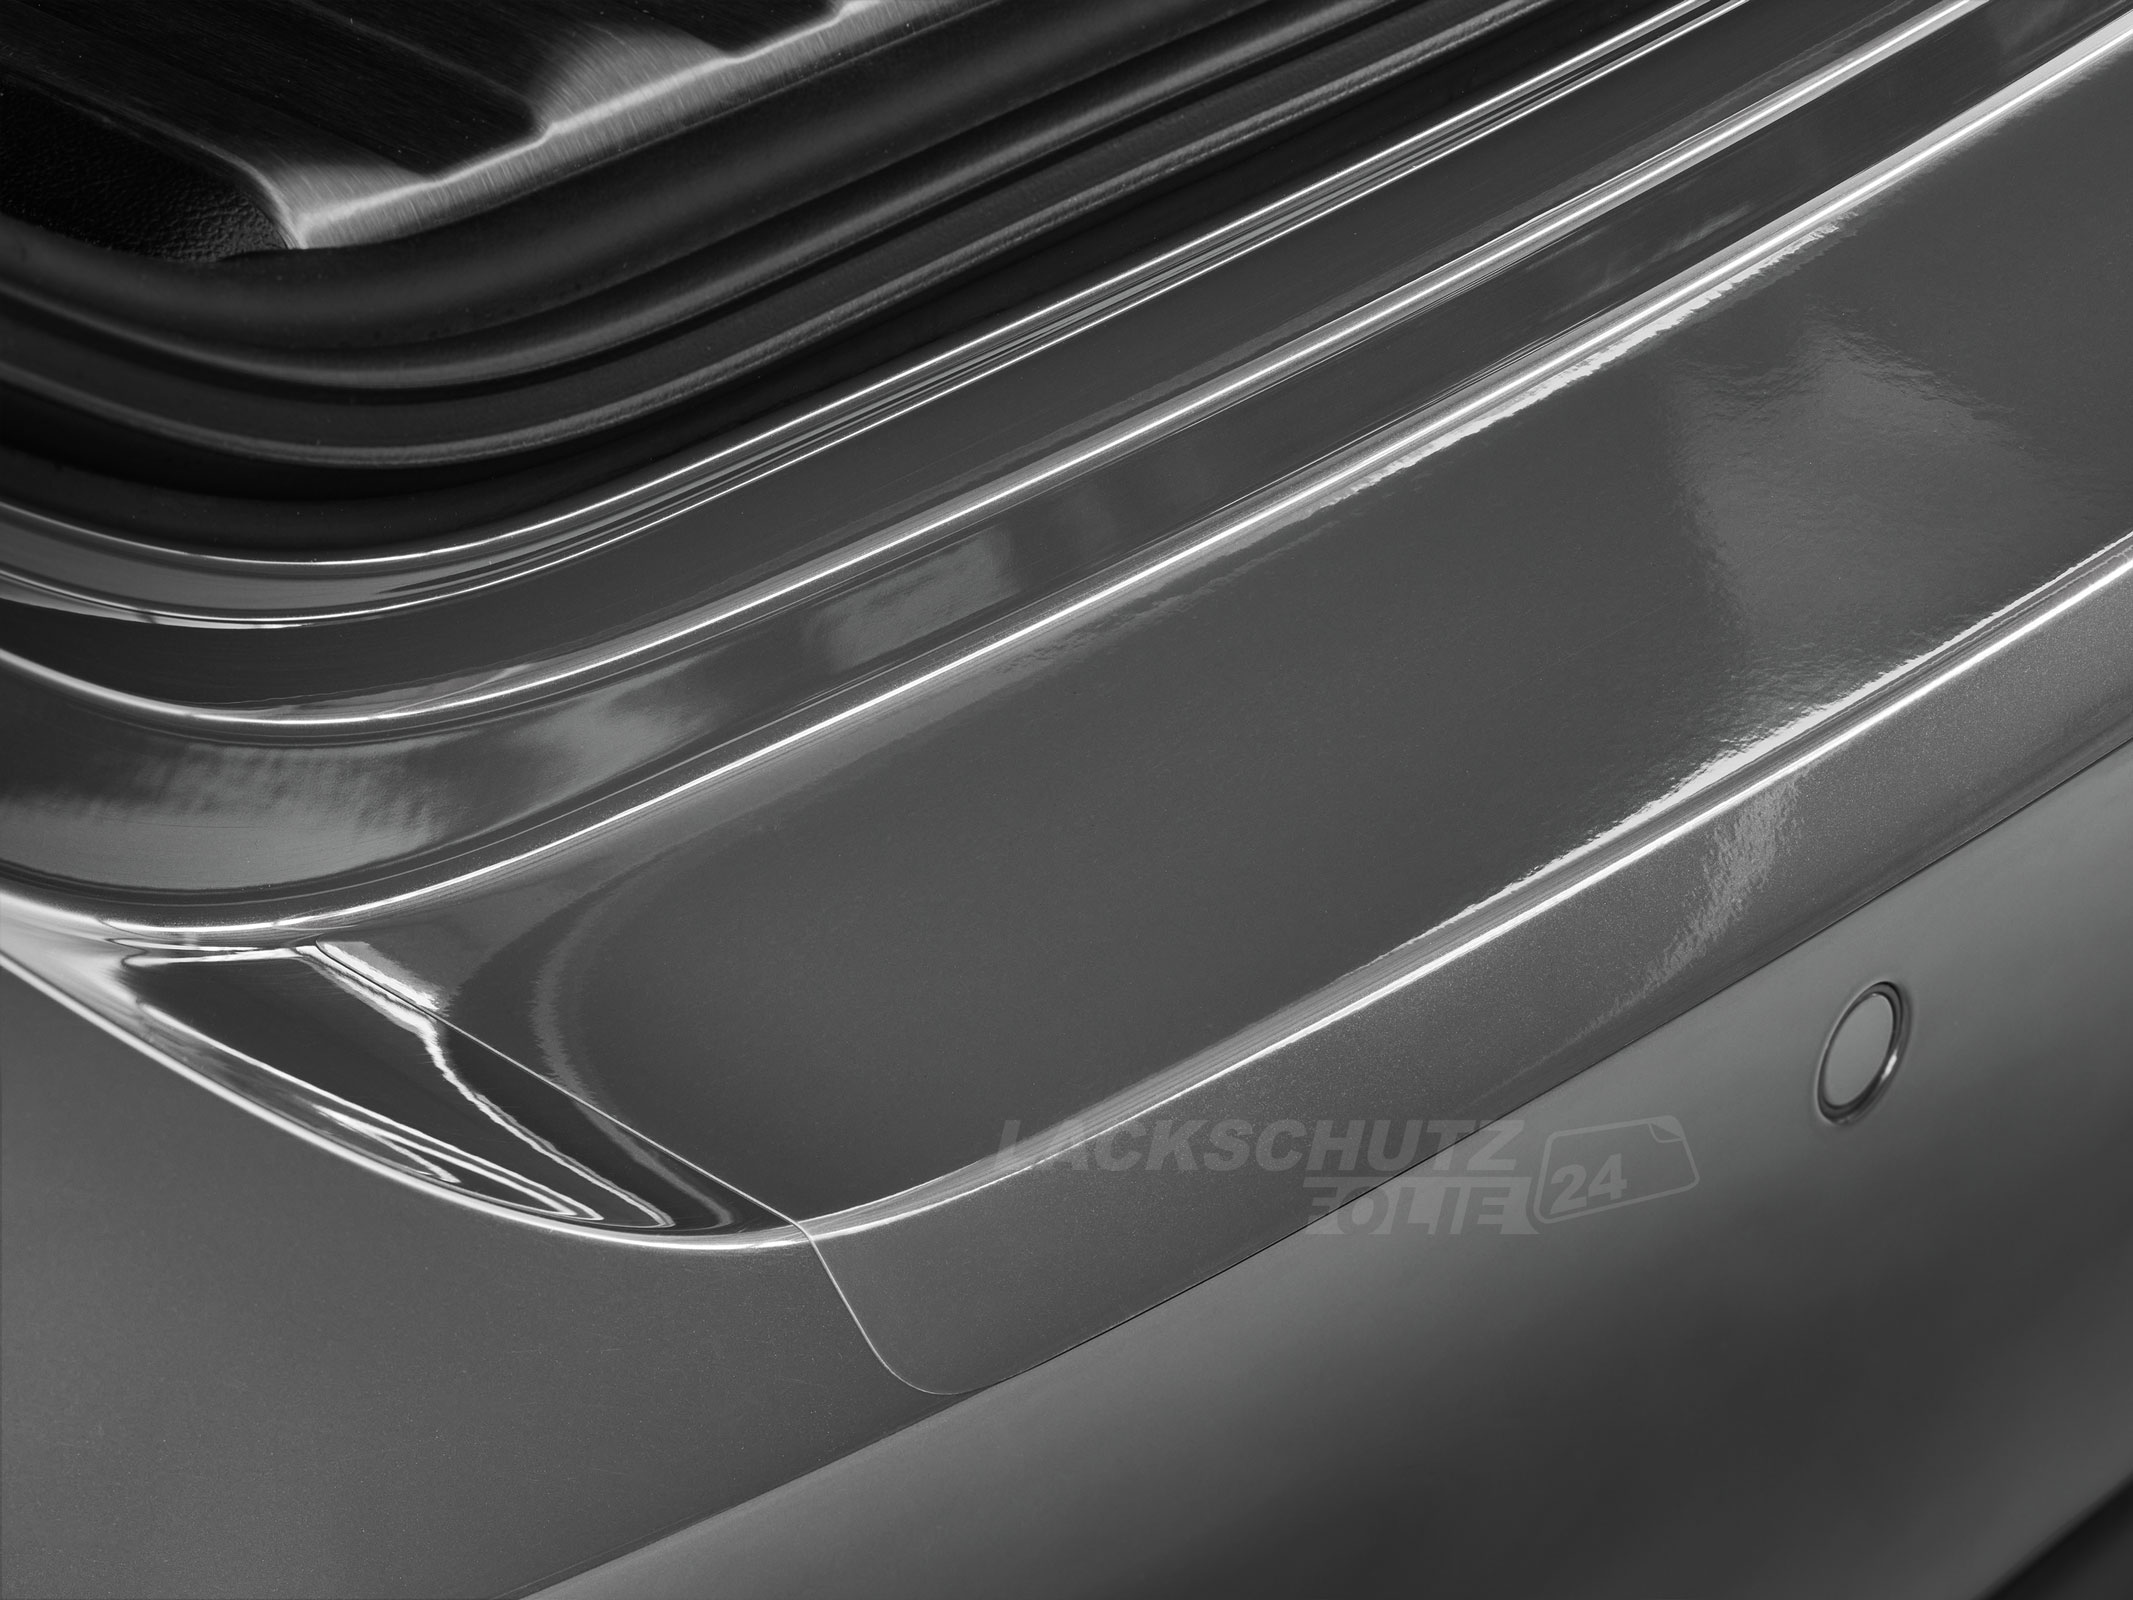 Ladekantenschutzfolie - Transparent Glatt Hochglänzend 240 µm stark für Audi A3 Typ 8V, BJ 08/2012-2020